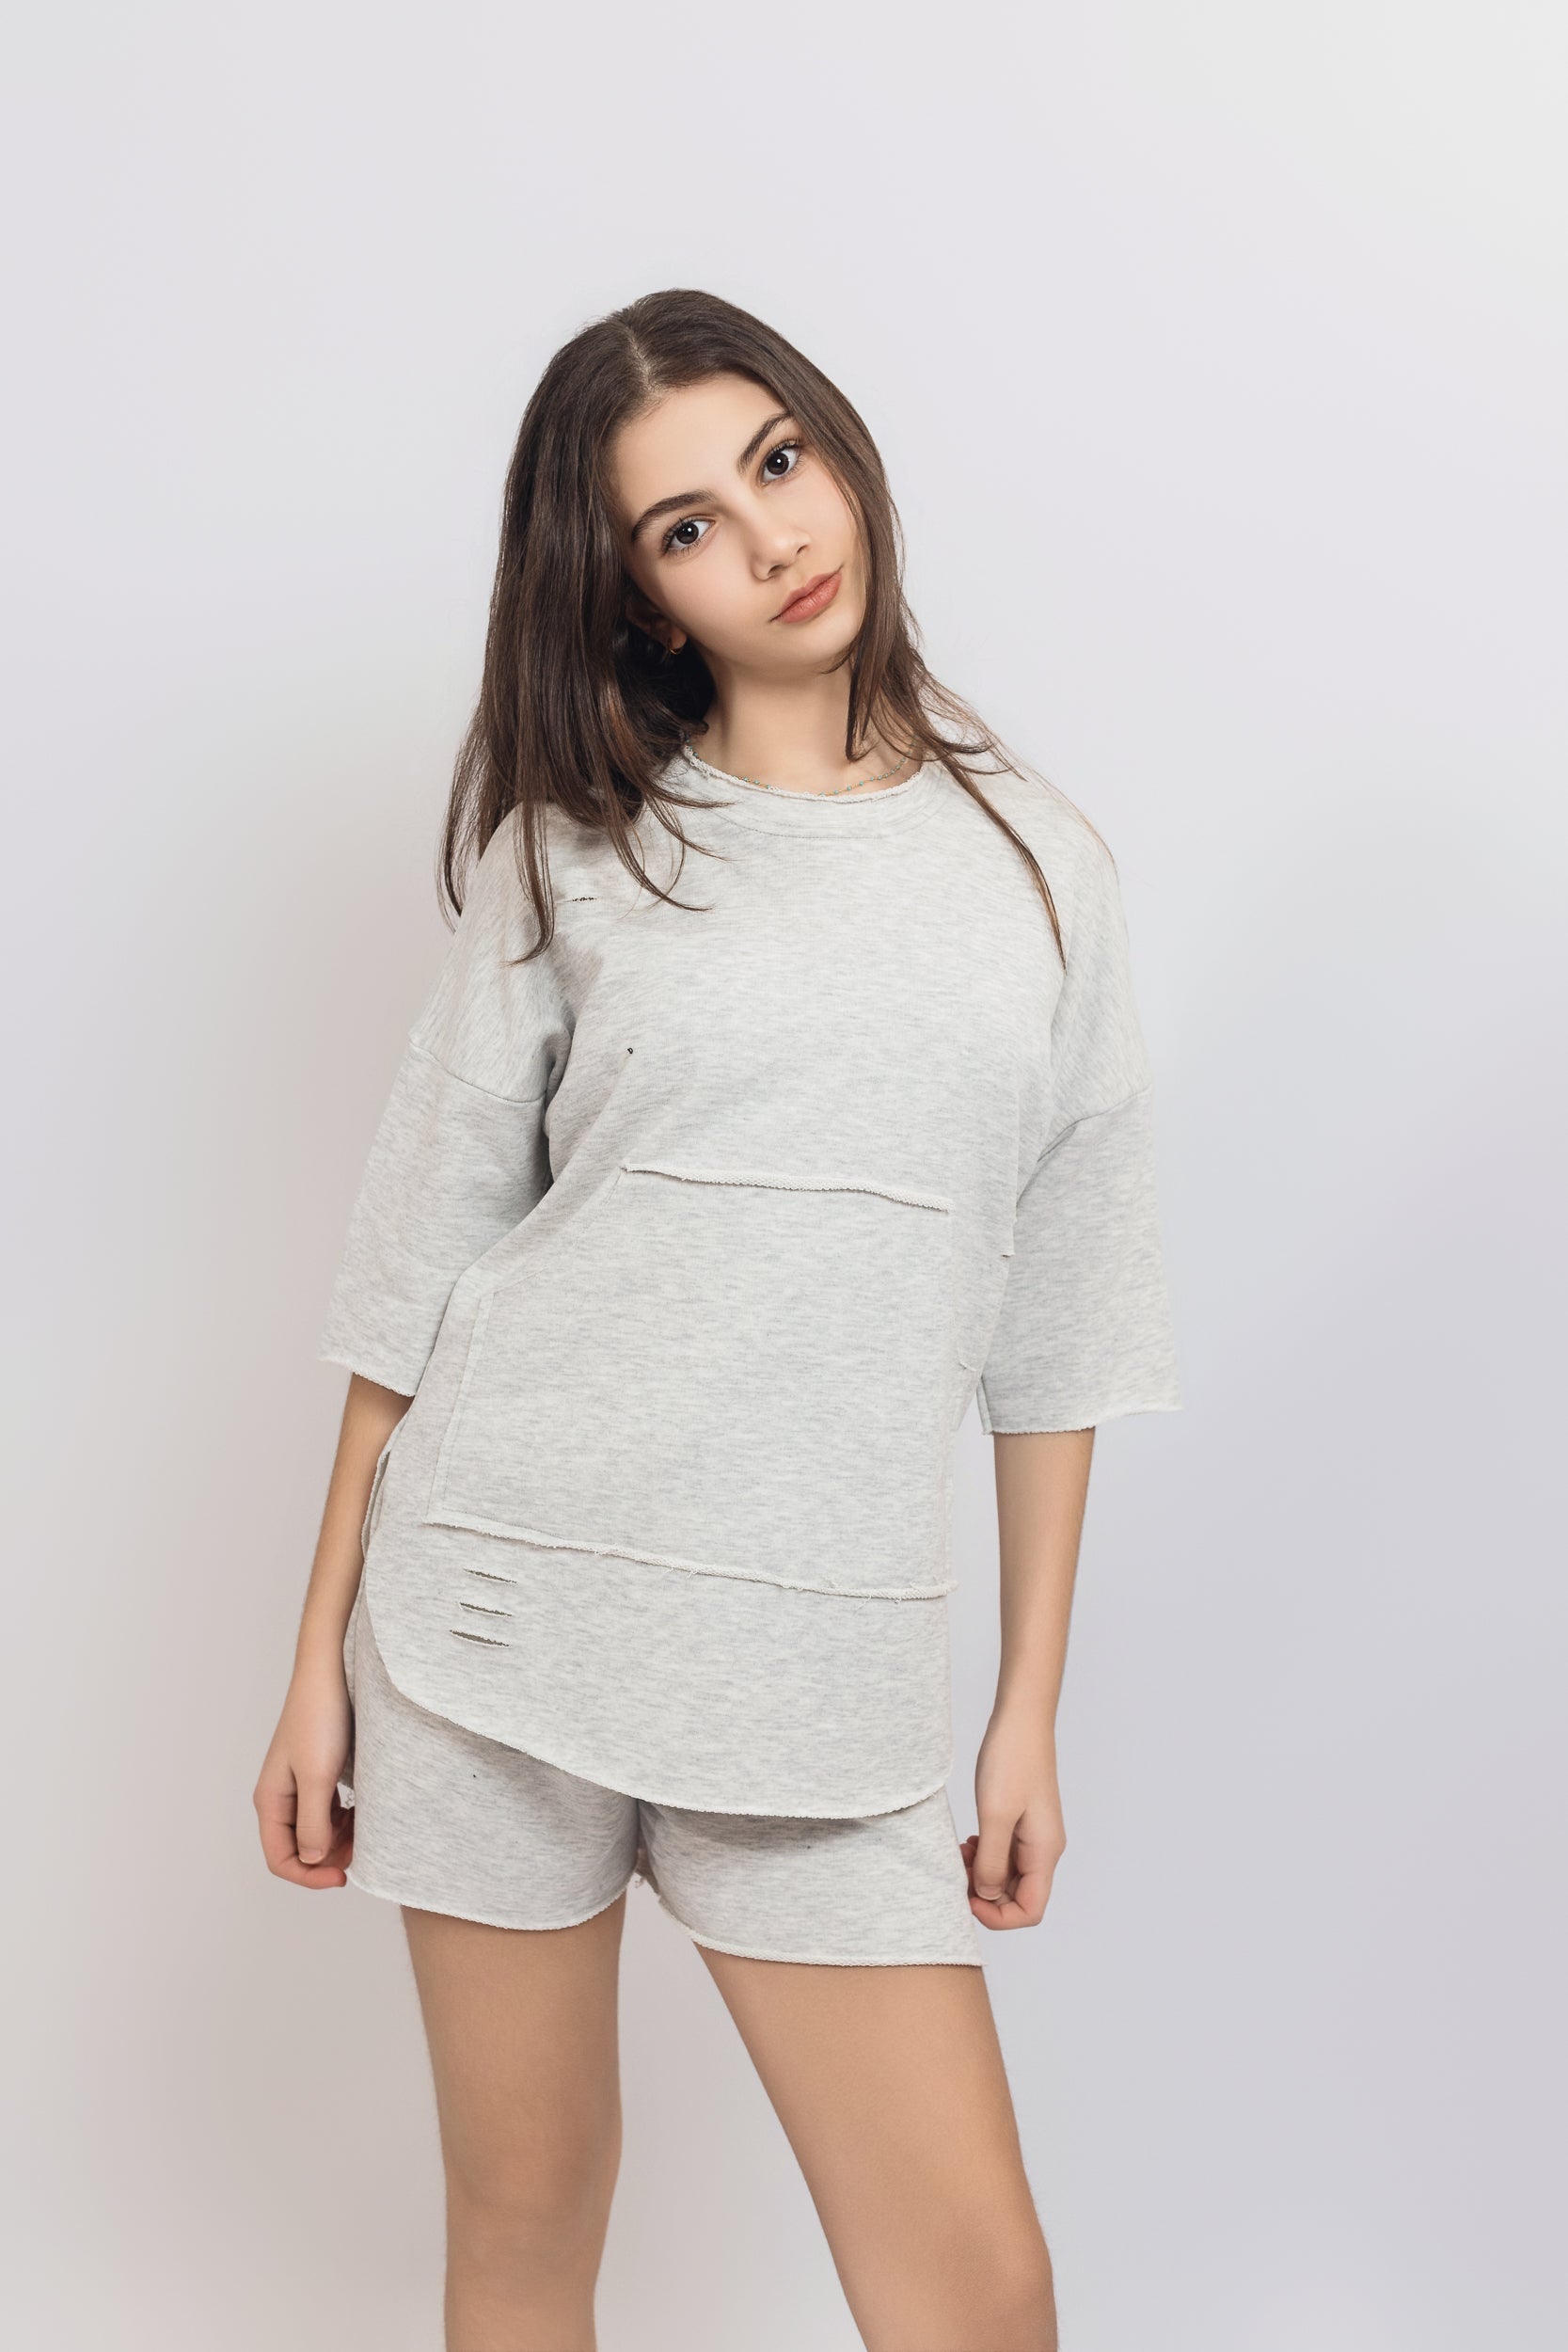 Oversized Sweatshirt With Pockets For Girls - Grey